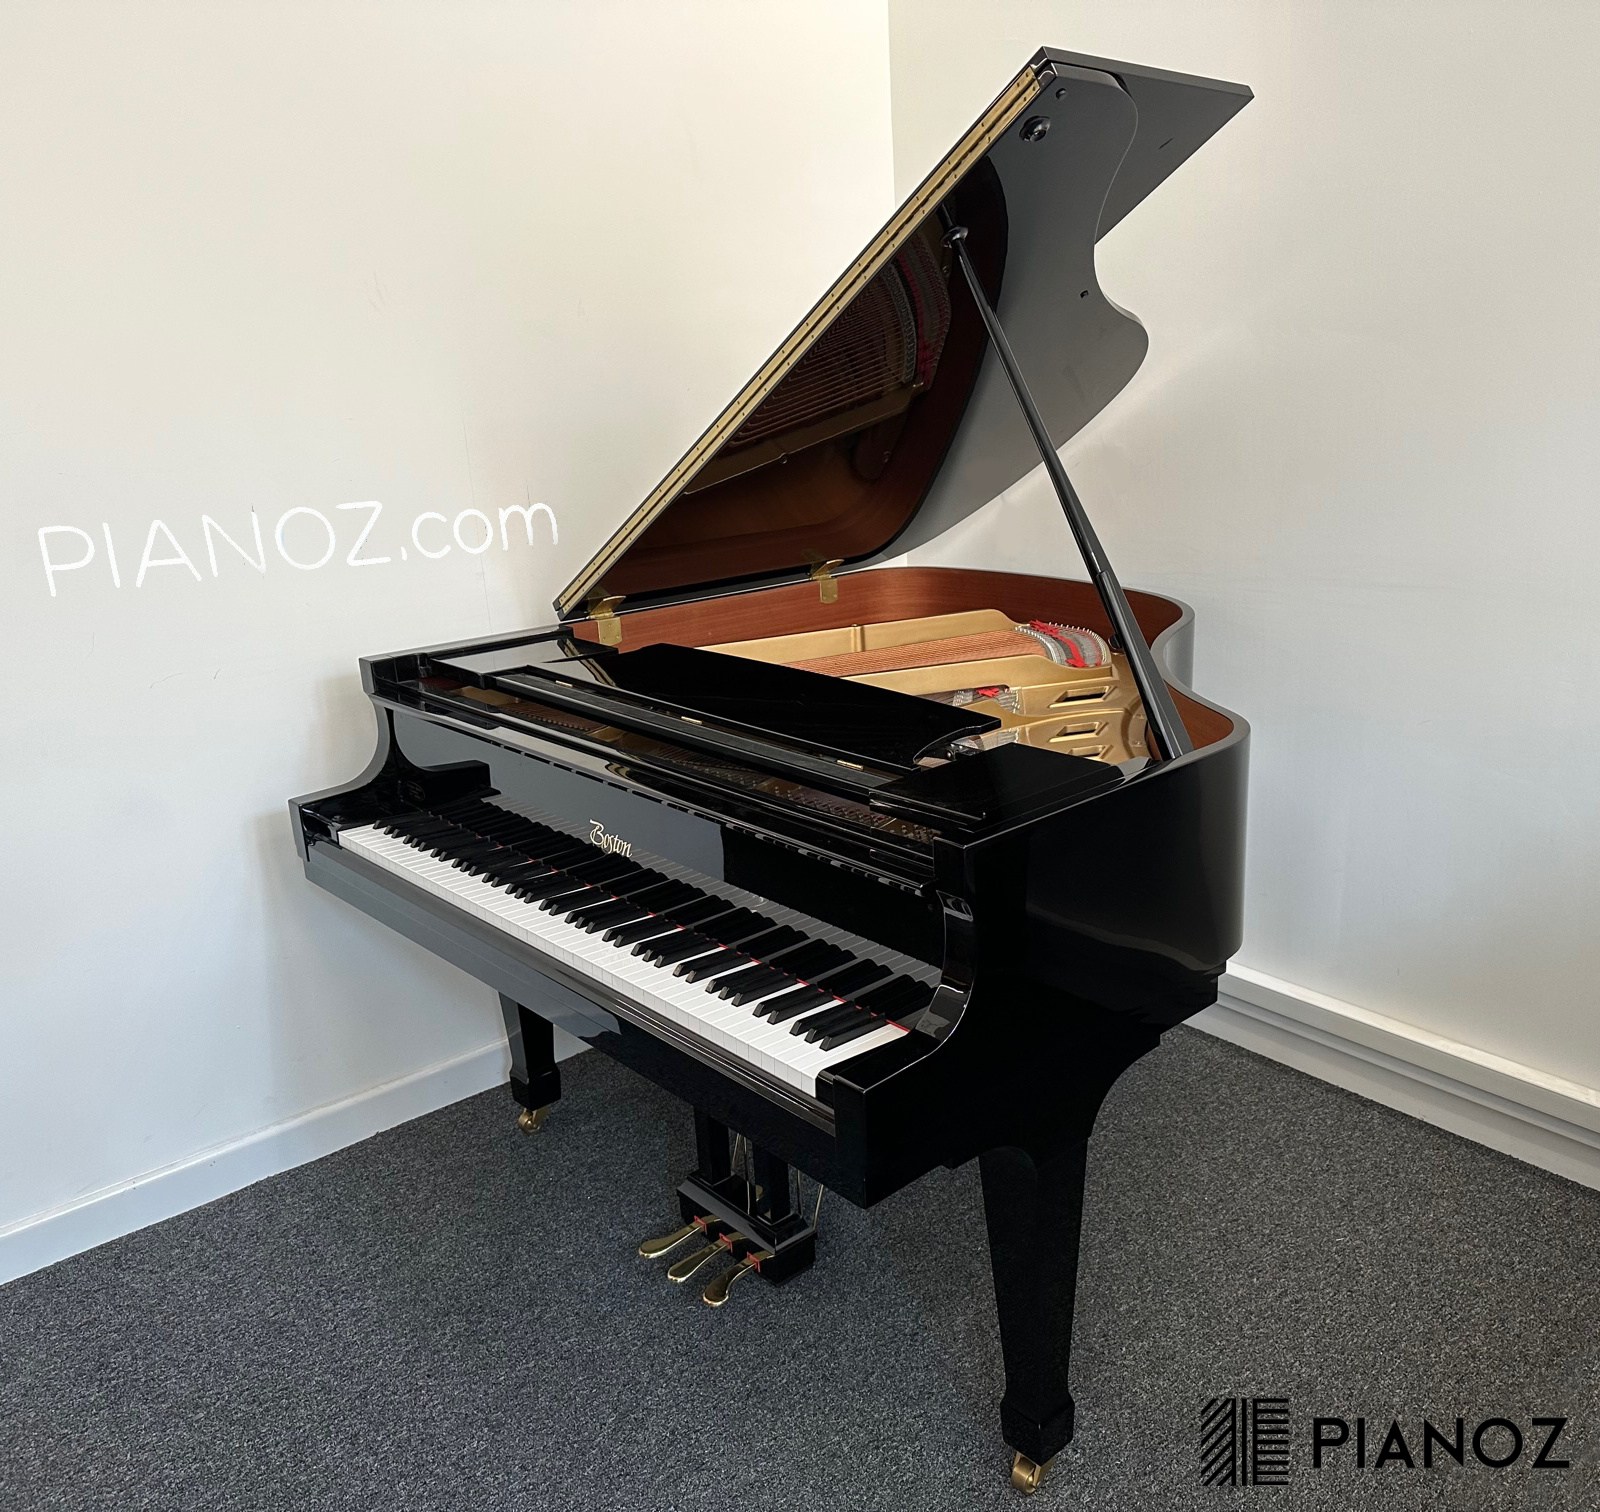 Steinway Boston 156 Baby Grand Piano piano for sale in UK